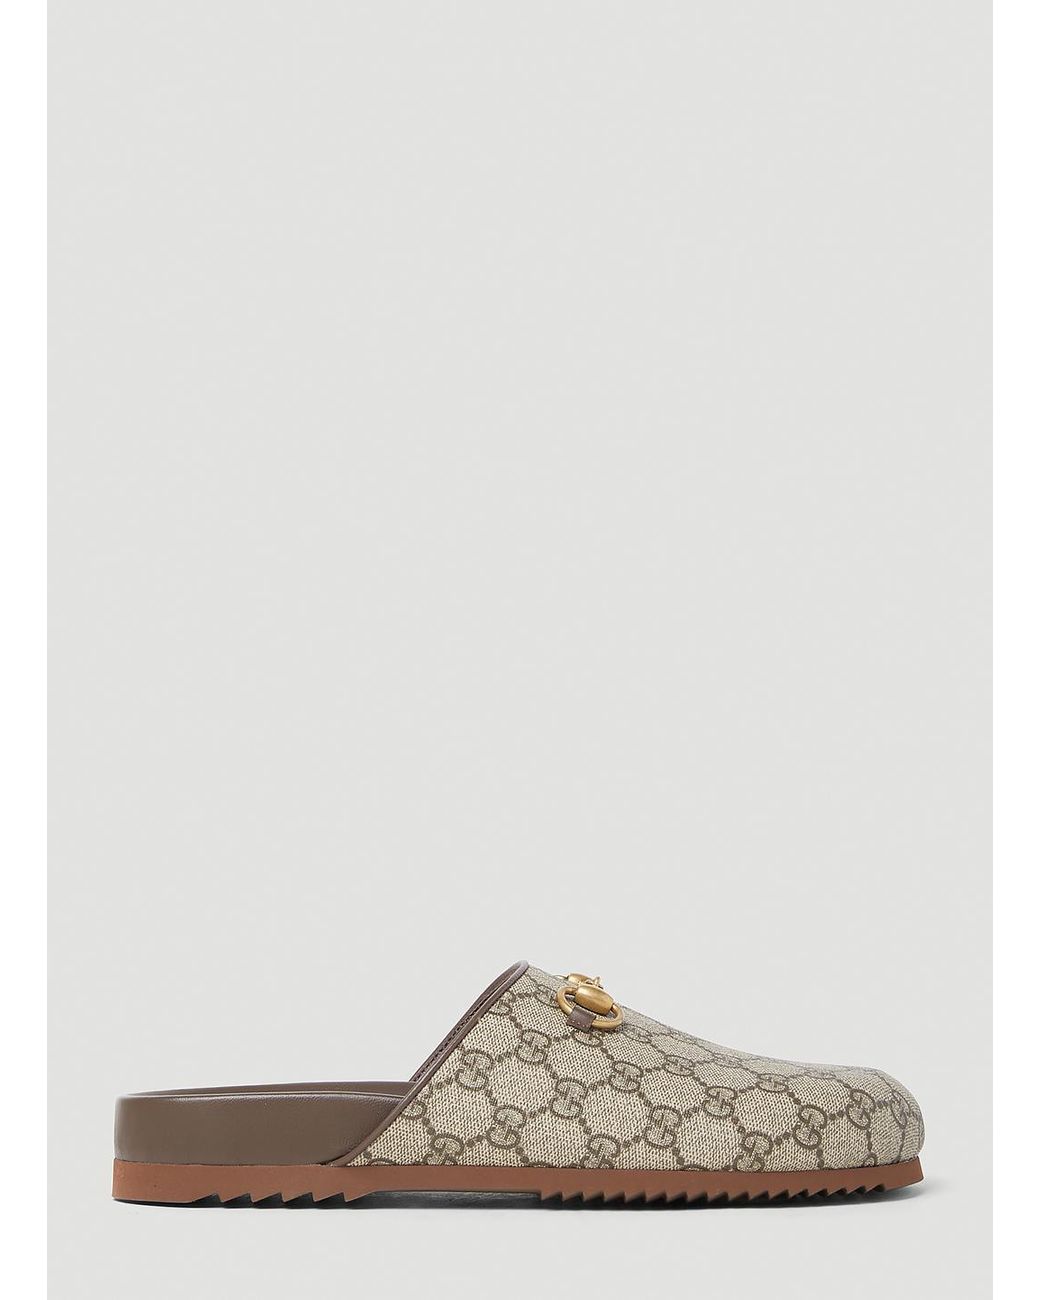 Gucci GG Supreme Horsebit Slipper Shoes in Brown | Lyst